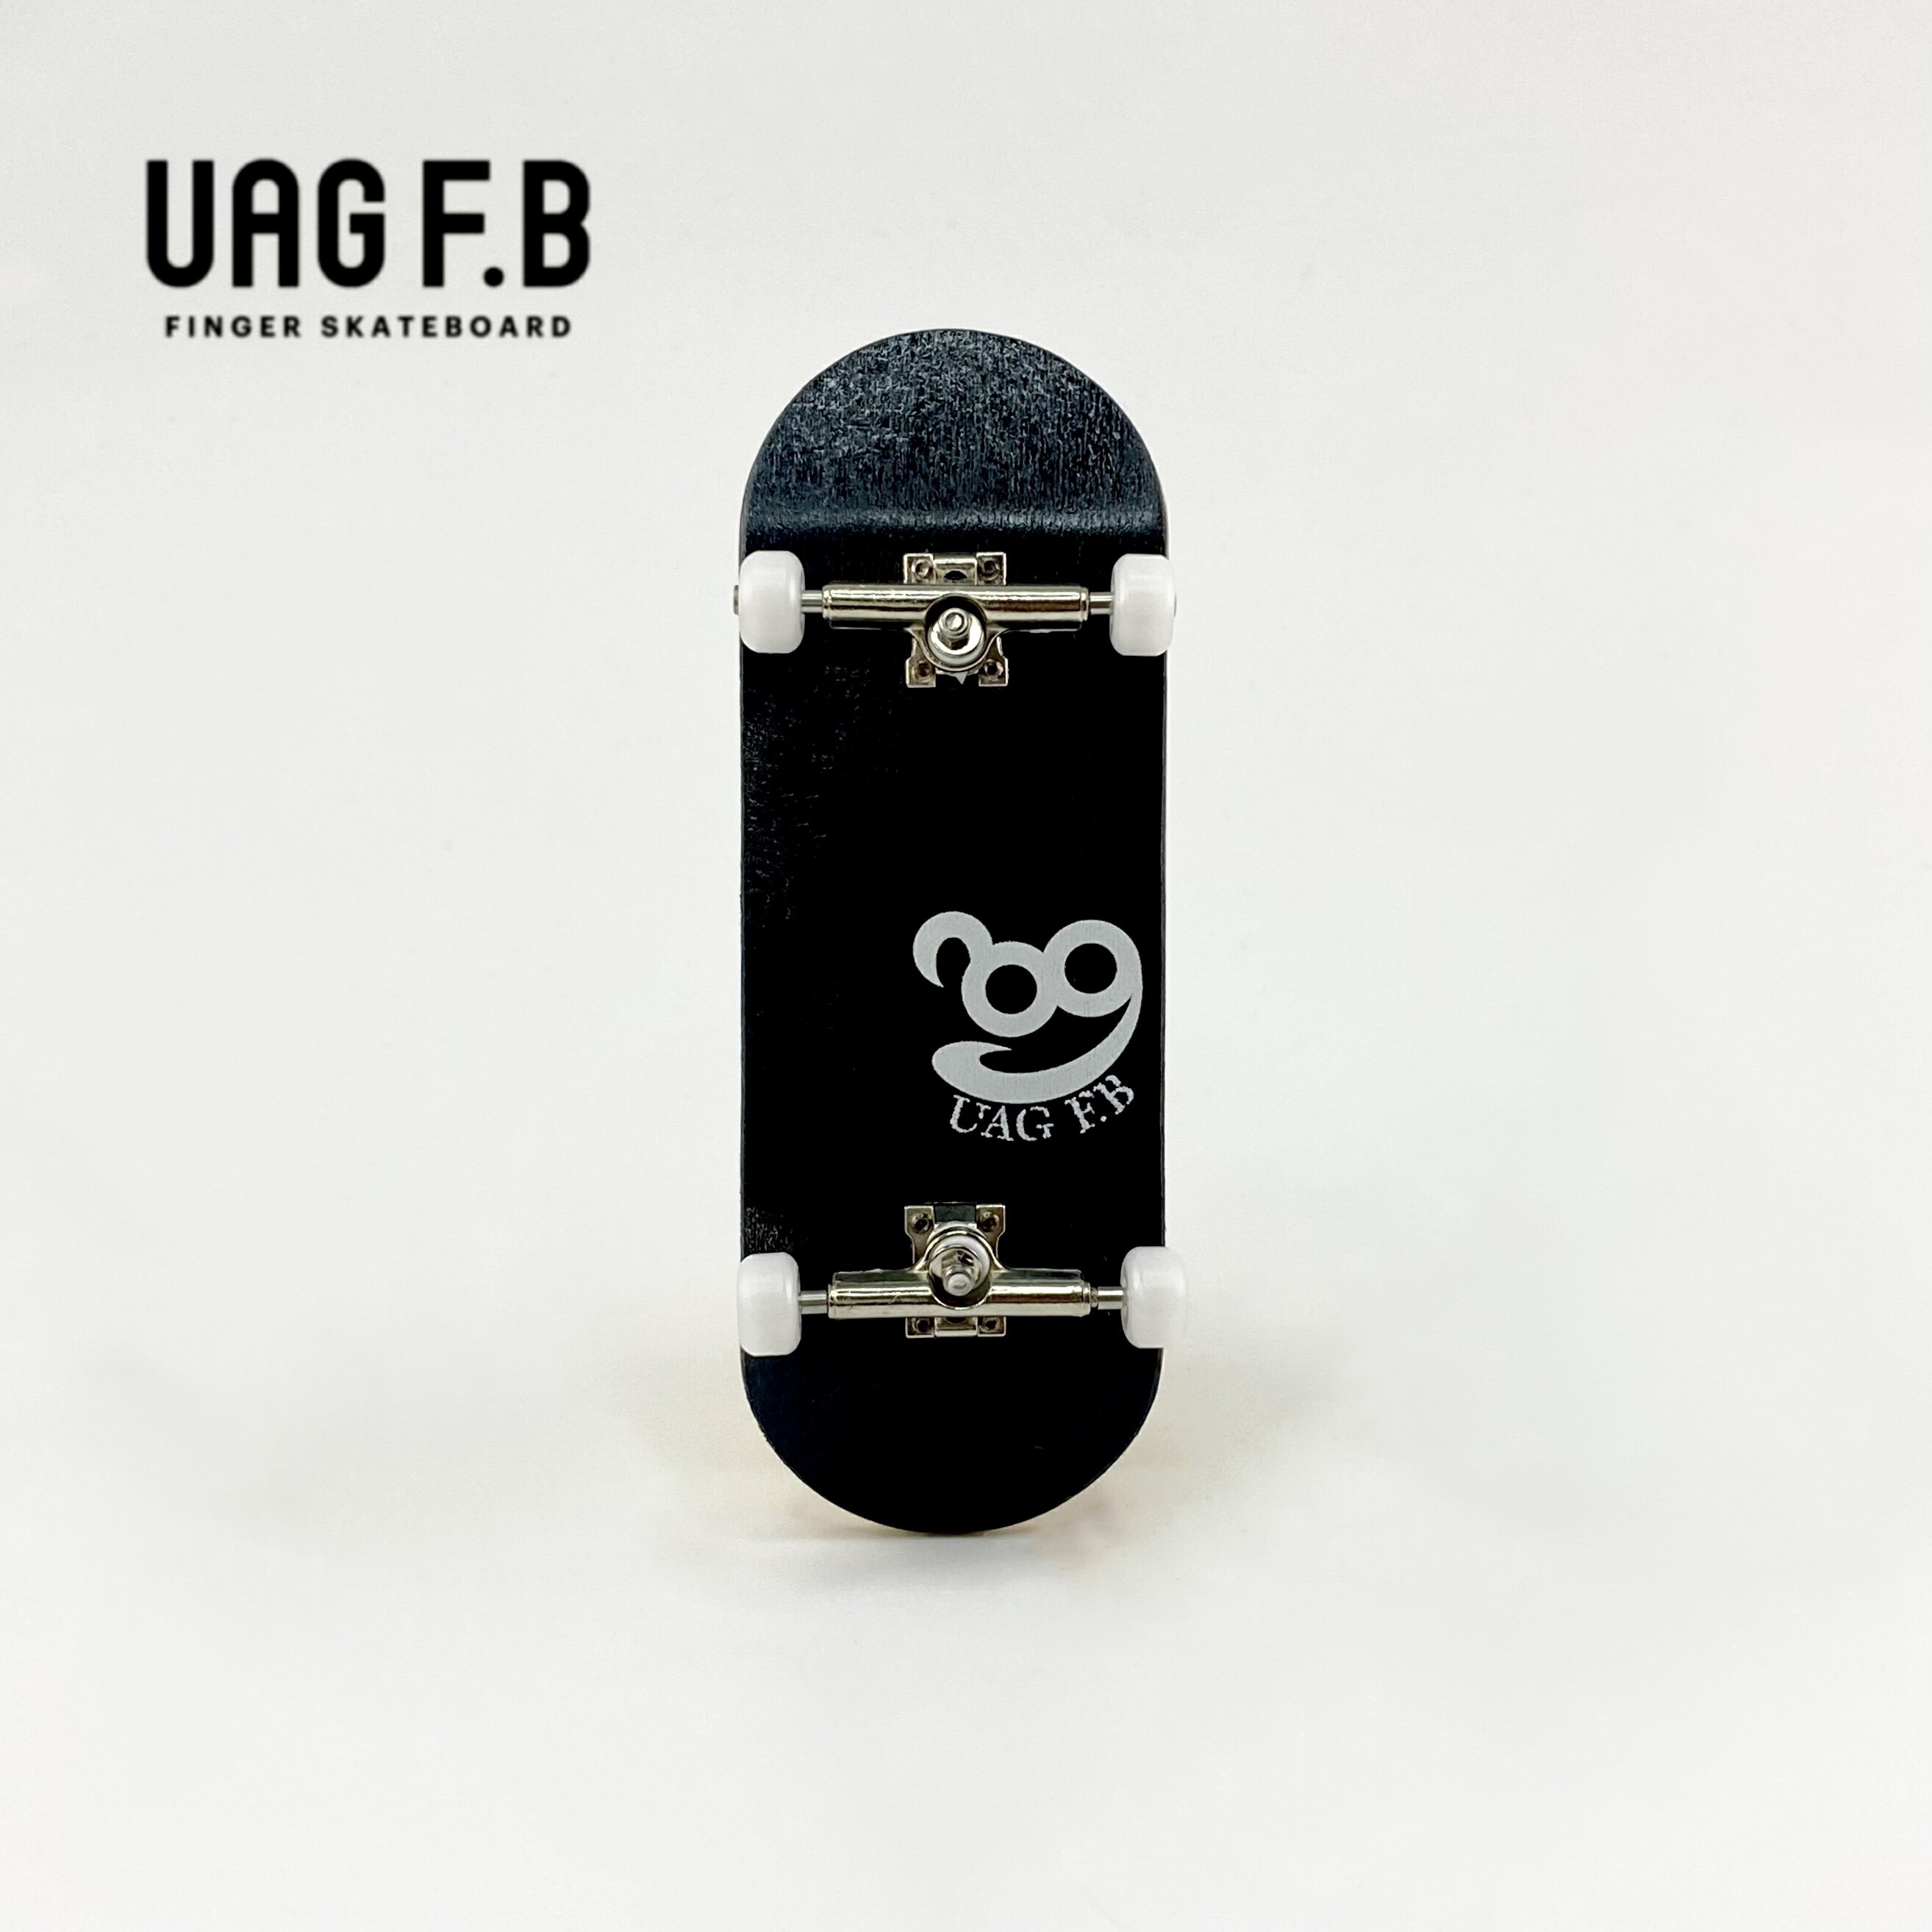 UAG F.B コンプリート / Simple / ブラック / standard / finger skate board / 指スケ / 指スケボー